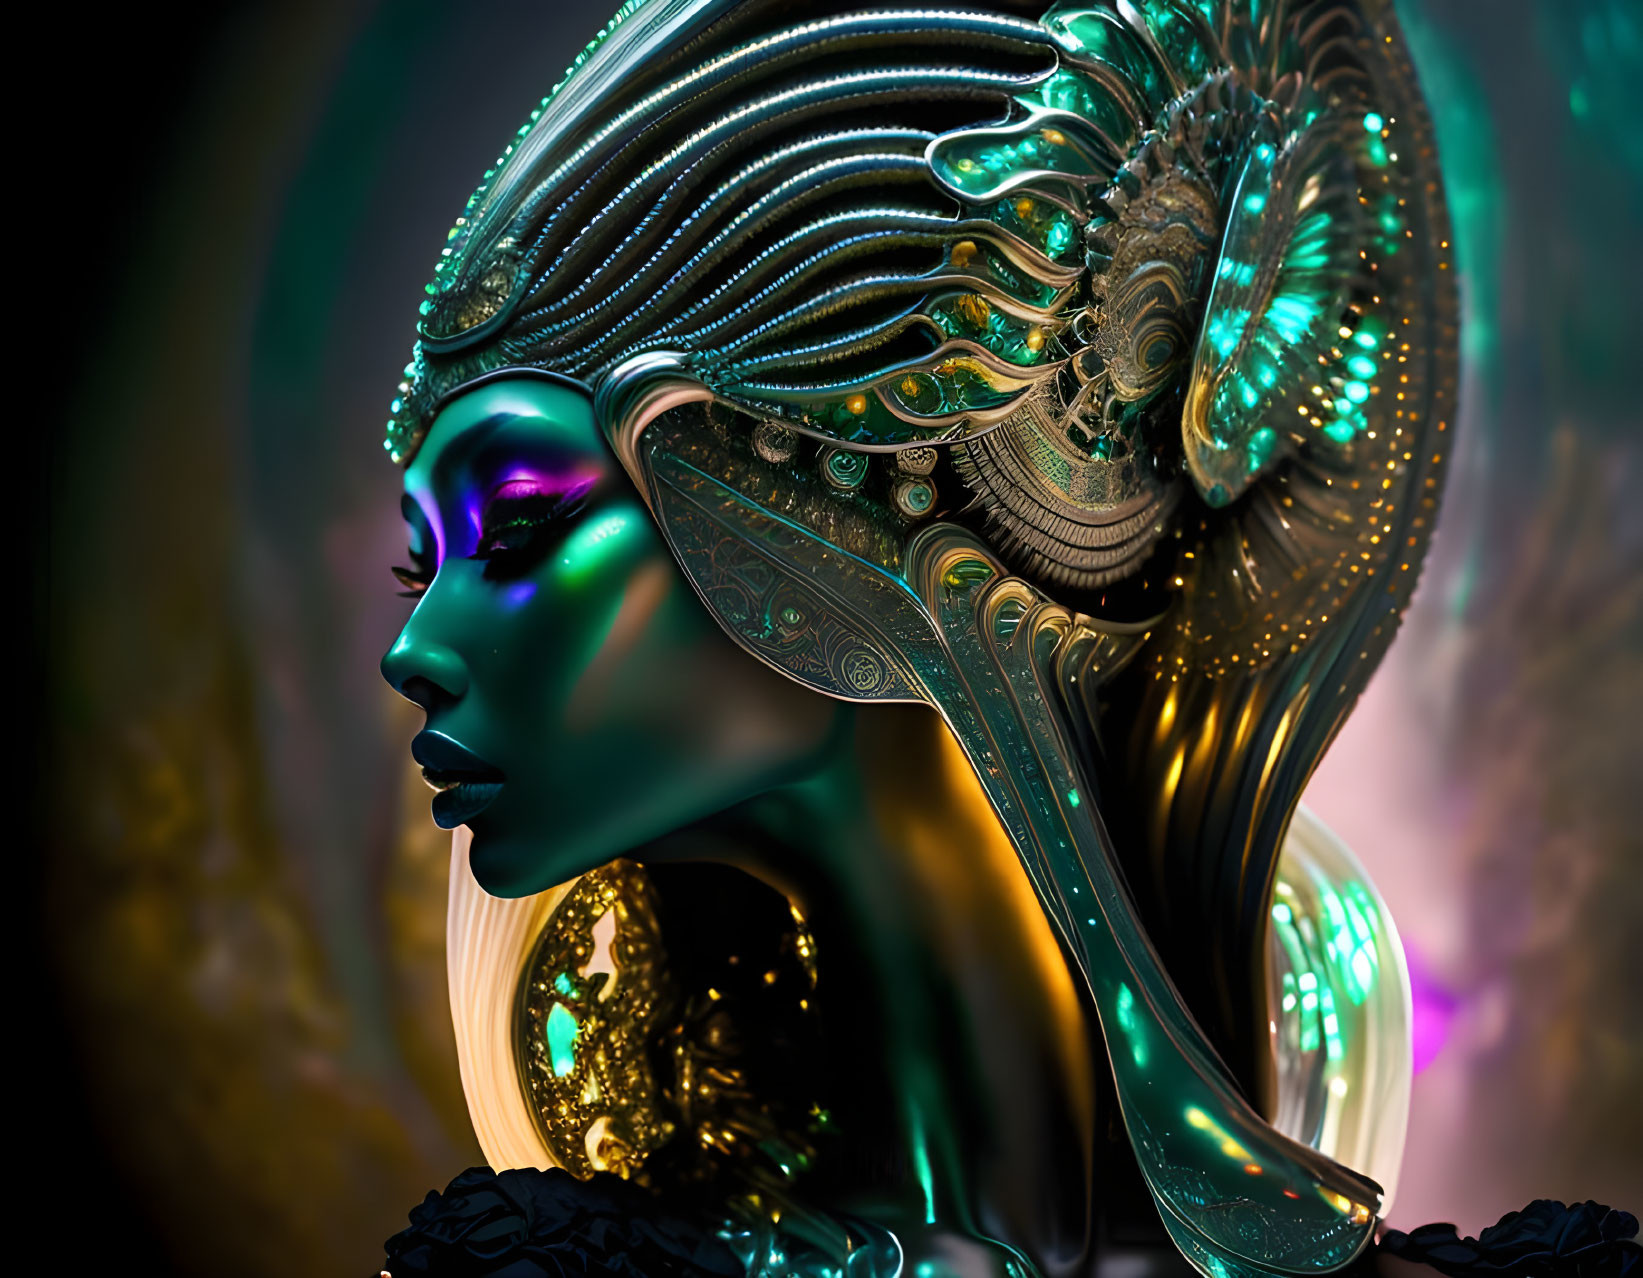 Female Figure with Elaborate Metallic Headdress in Green and Gold Hues